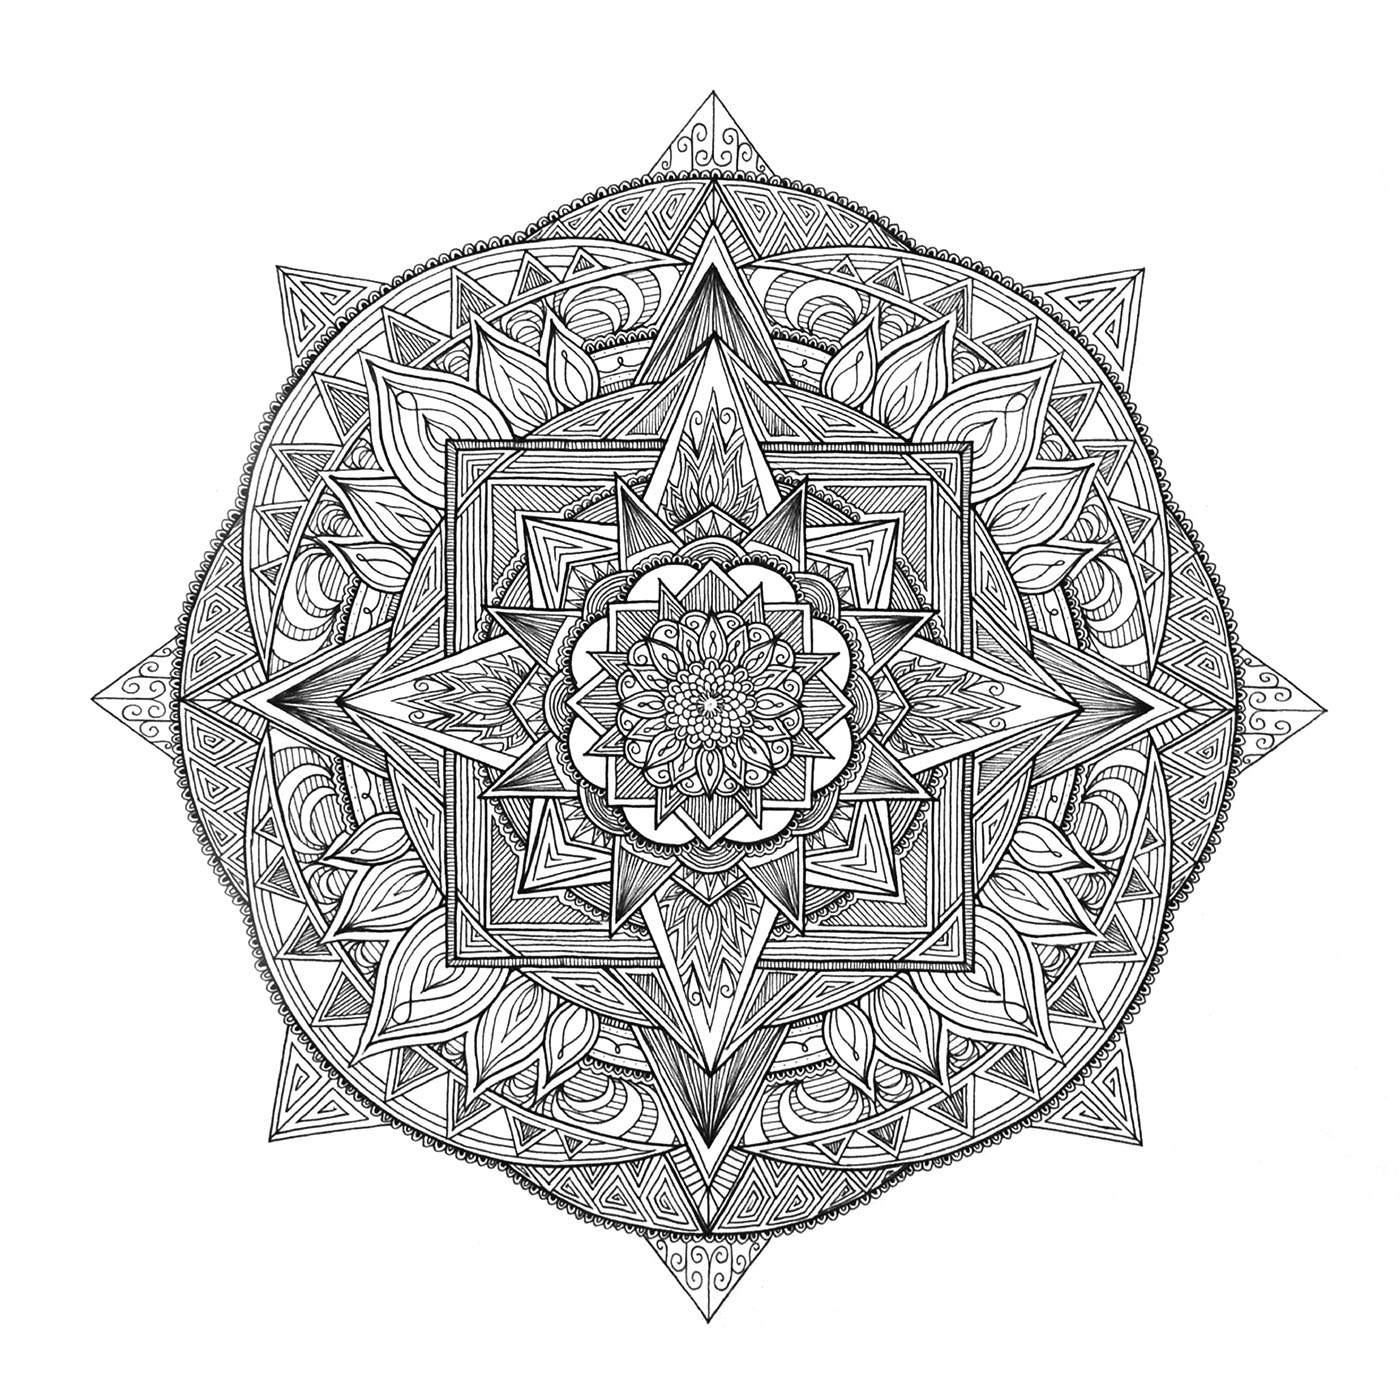 Mandala radial design black and white Drawing  Floral design ILLUSTRATION  ink drawing monochrome Nature zentangle